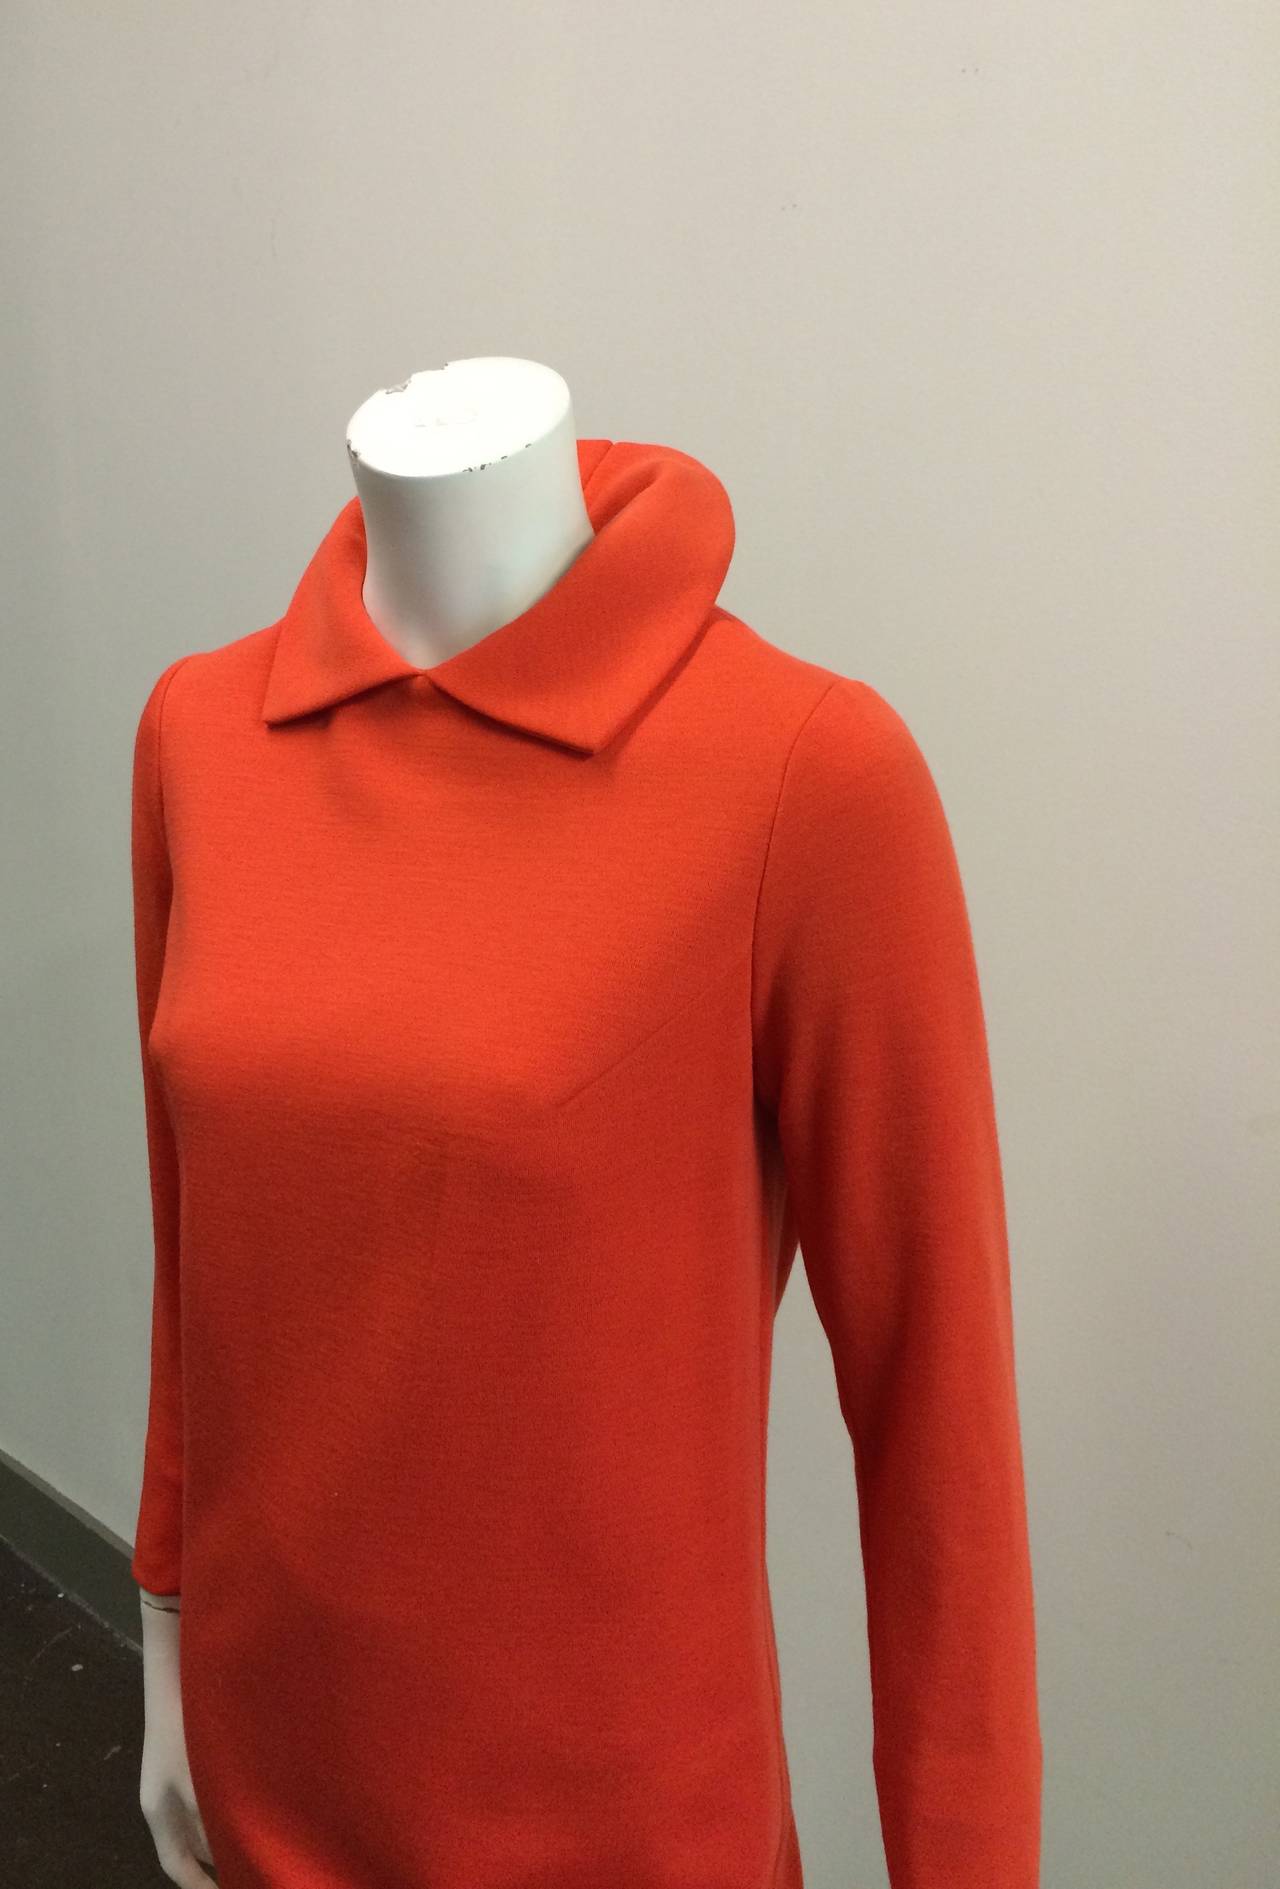 Women's Bill Blass for Maurice Rentner 60s Chemise Wool Dress Size 6. For Sale